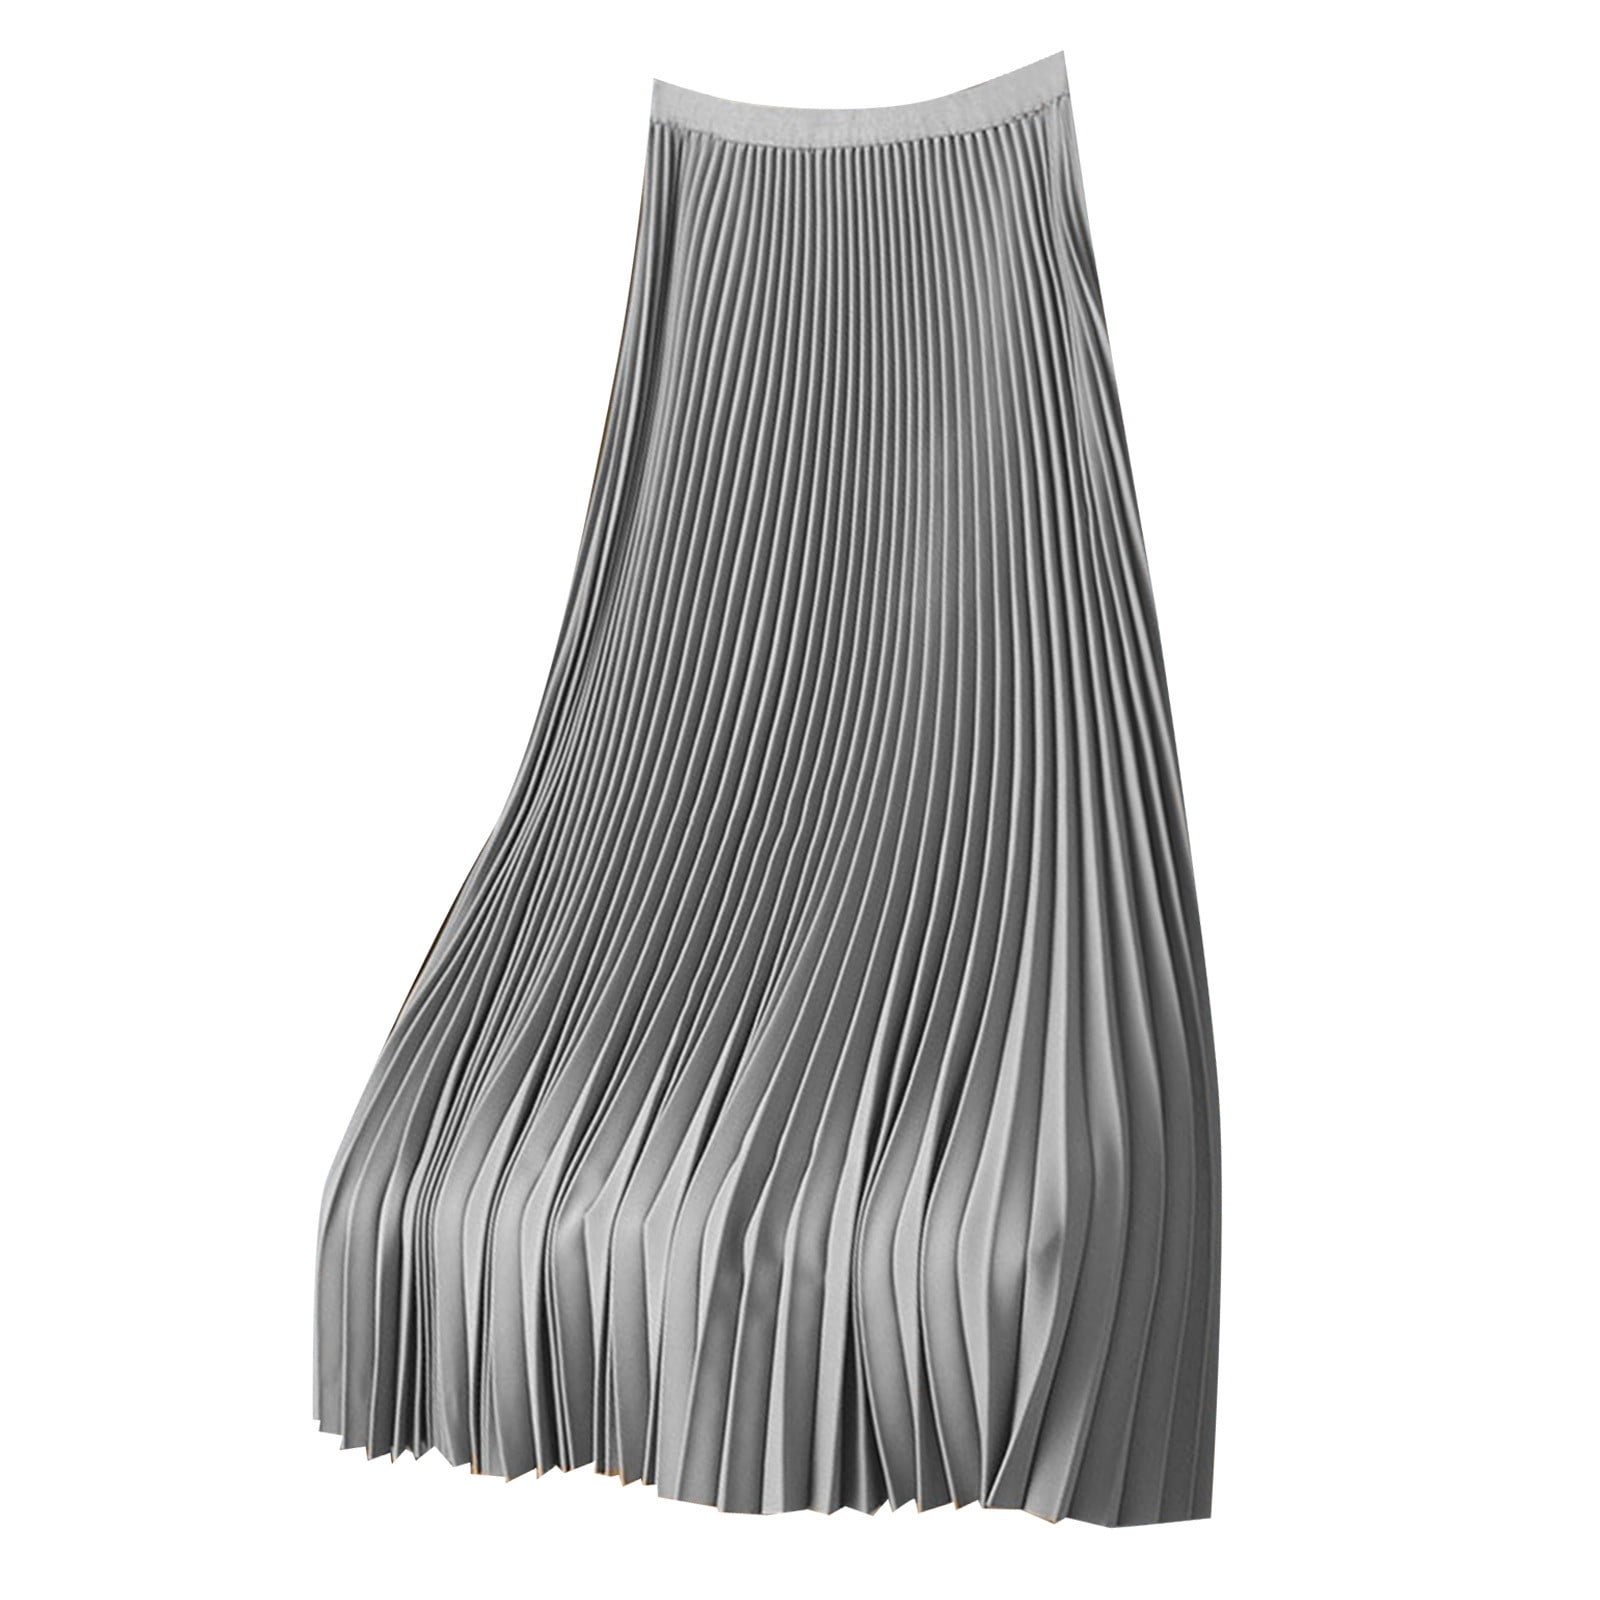 WEAIXIMIUNG Black Mini Skirt High Waisted Stretchy Solid Color Satin ...